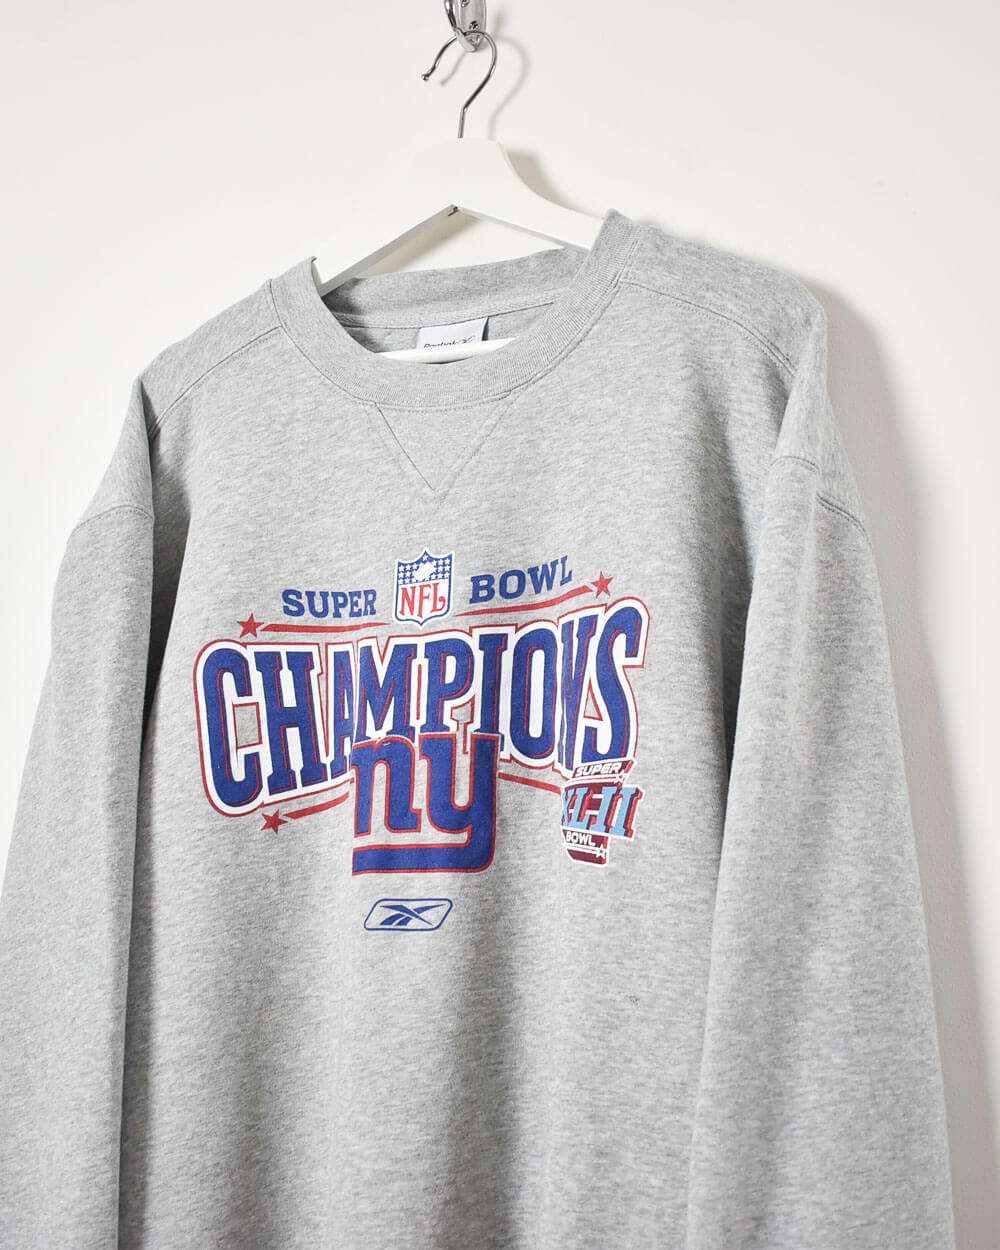 Reebok NFL NY Giants Super Bowl Champions Sweatshirt - XX-Large - Domno Vintage 90s, 80s, 00s Retro and Vintage Clothing 